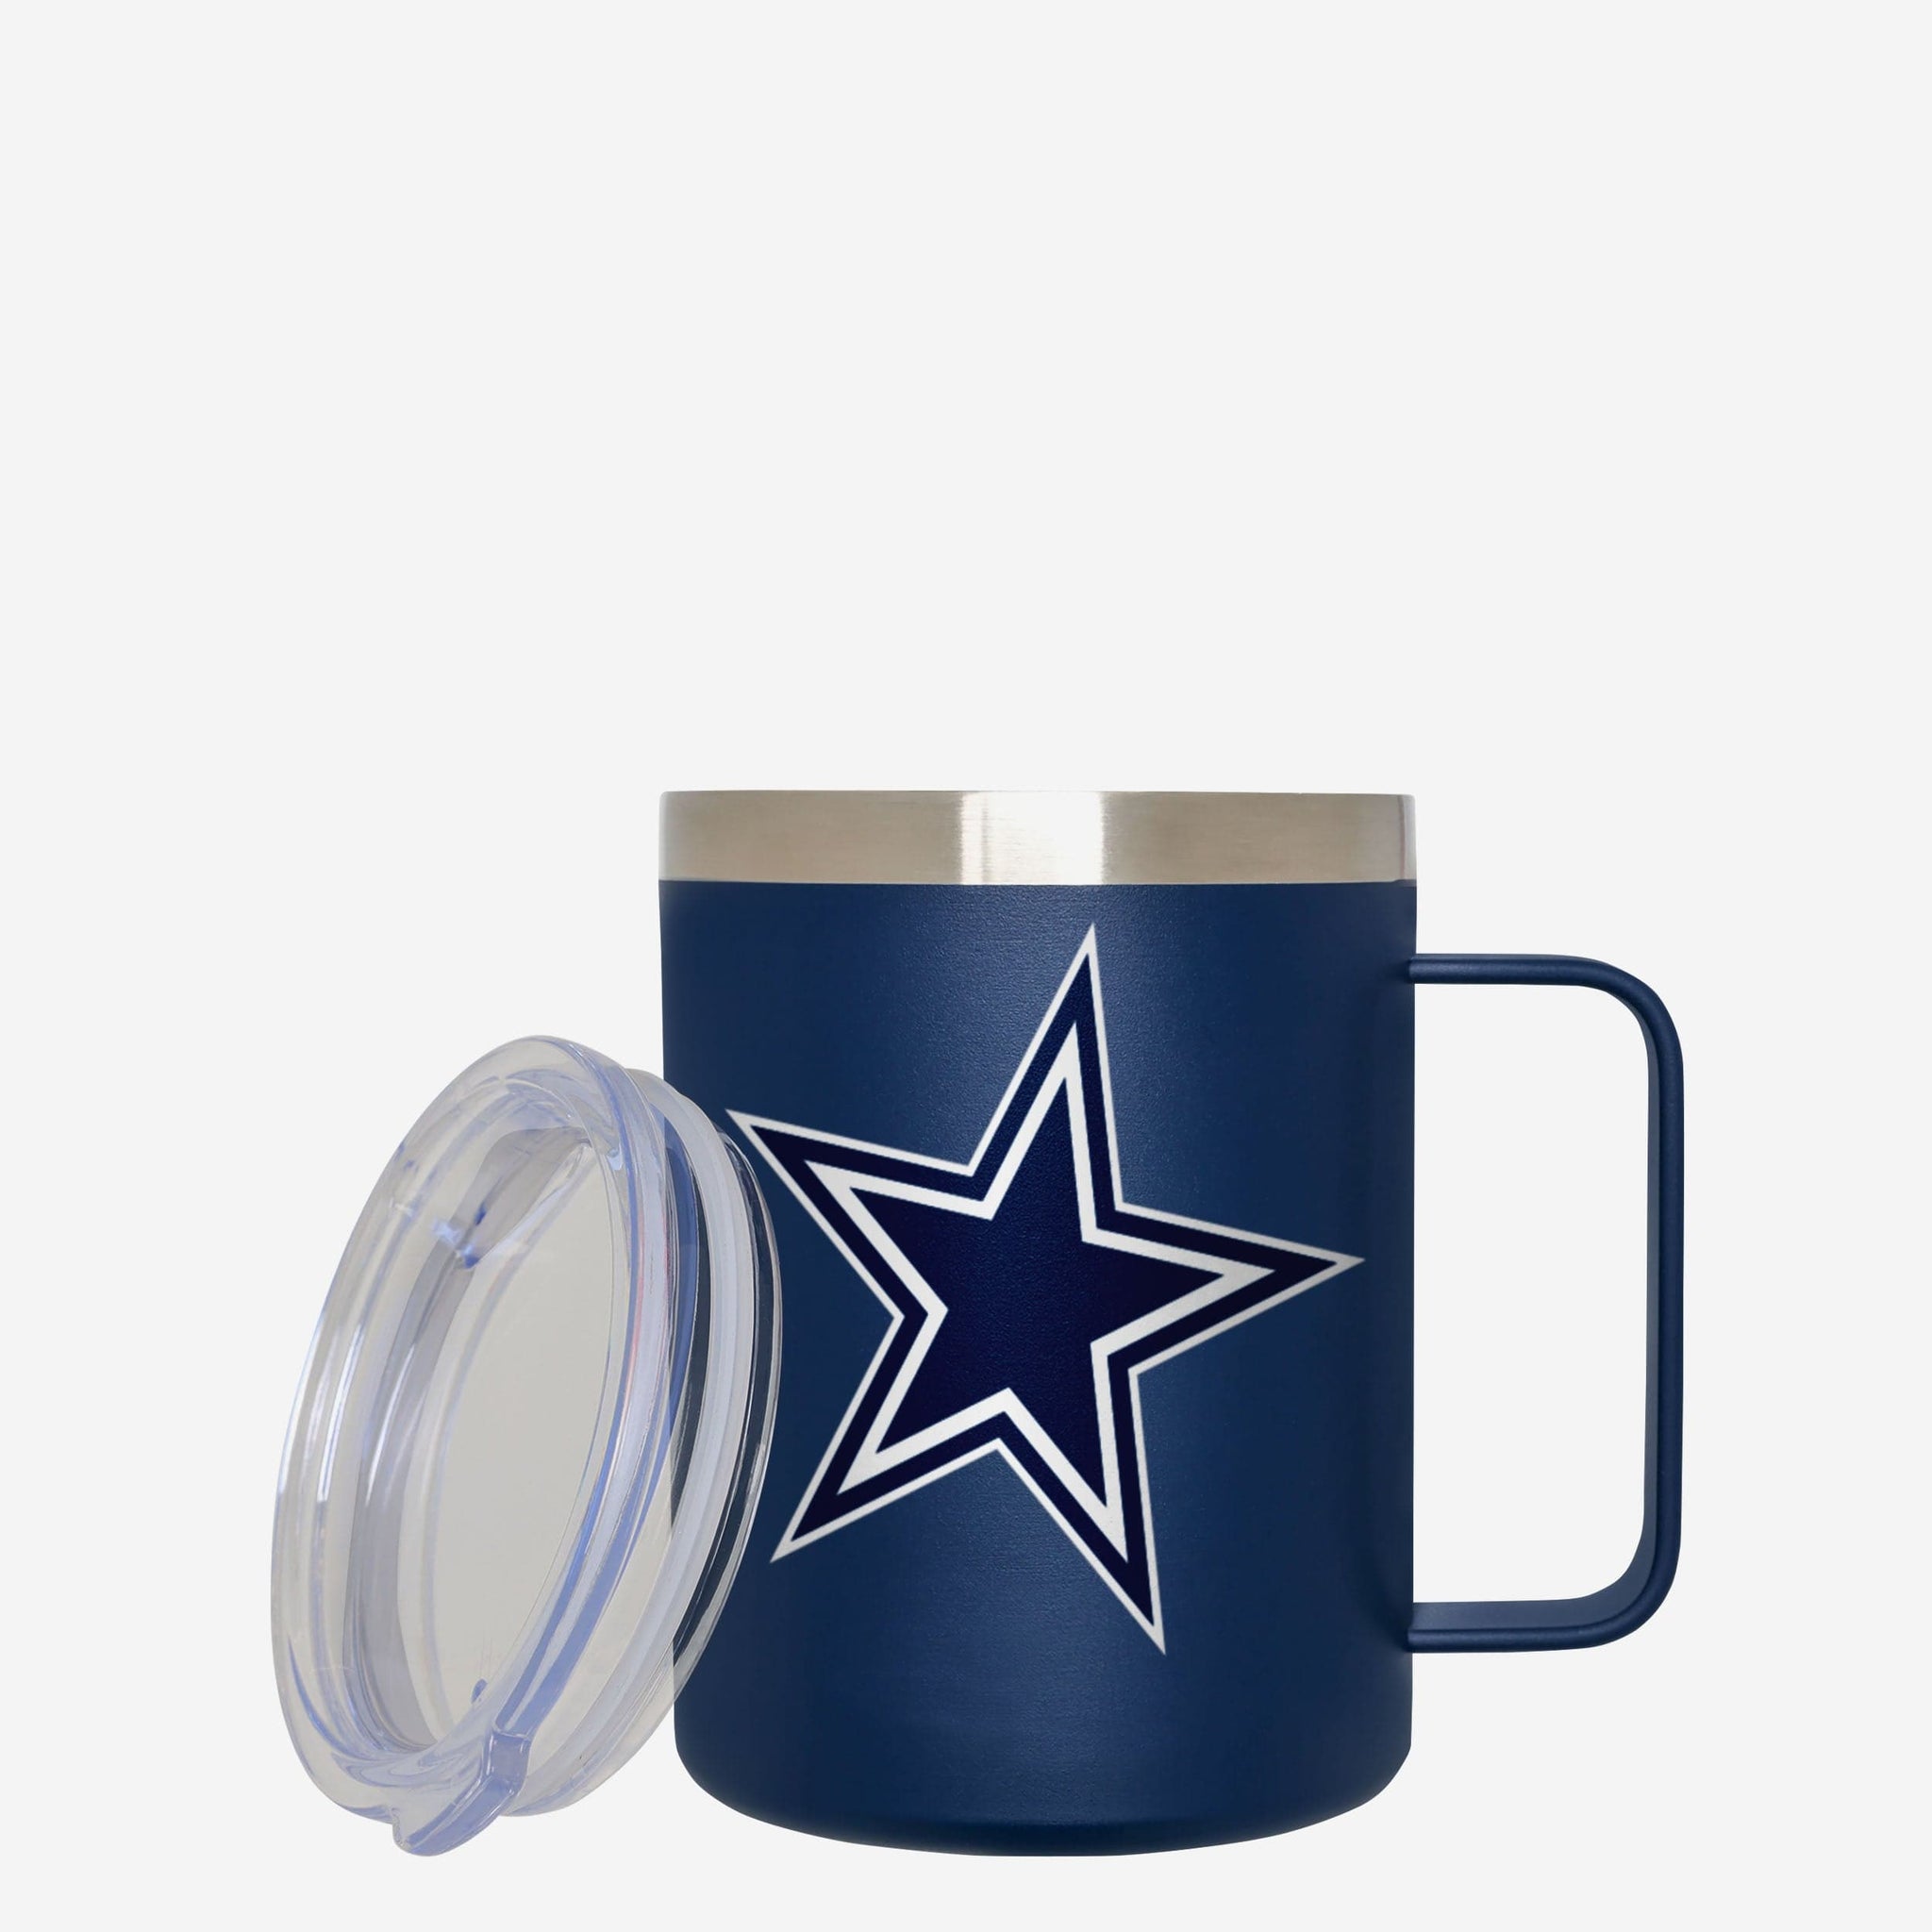 Dallas Cowboys Carry Insulated Print Coffee Mug Stainless Travel Mug 500ml